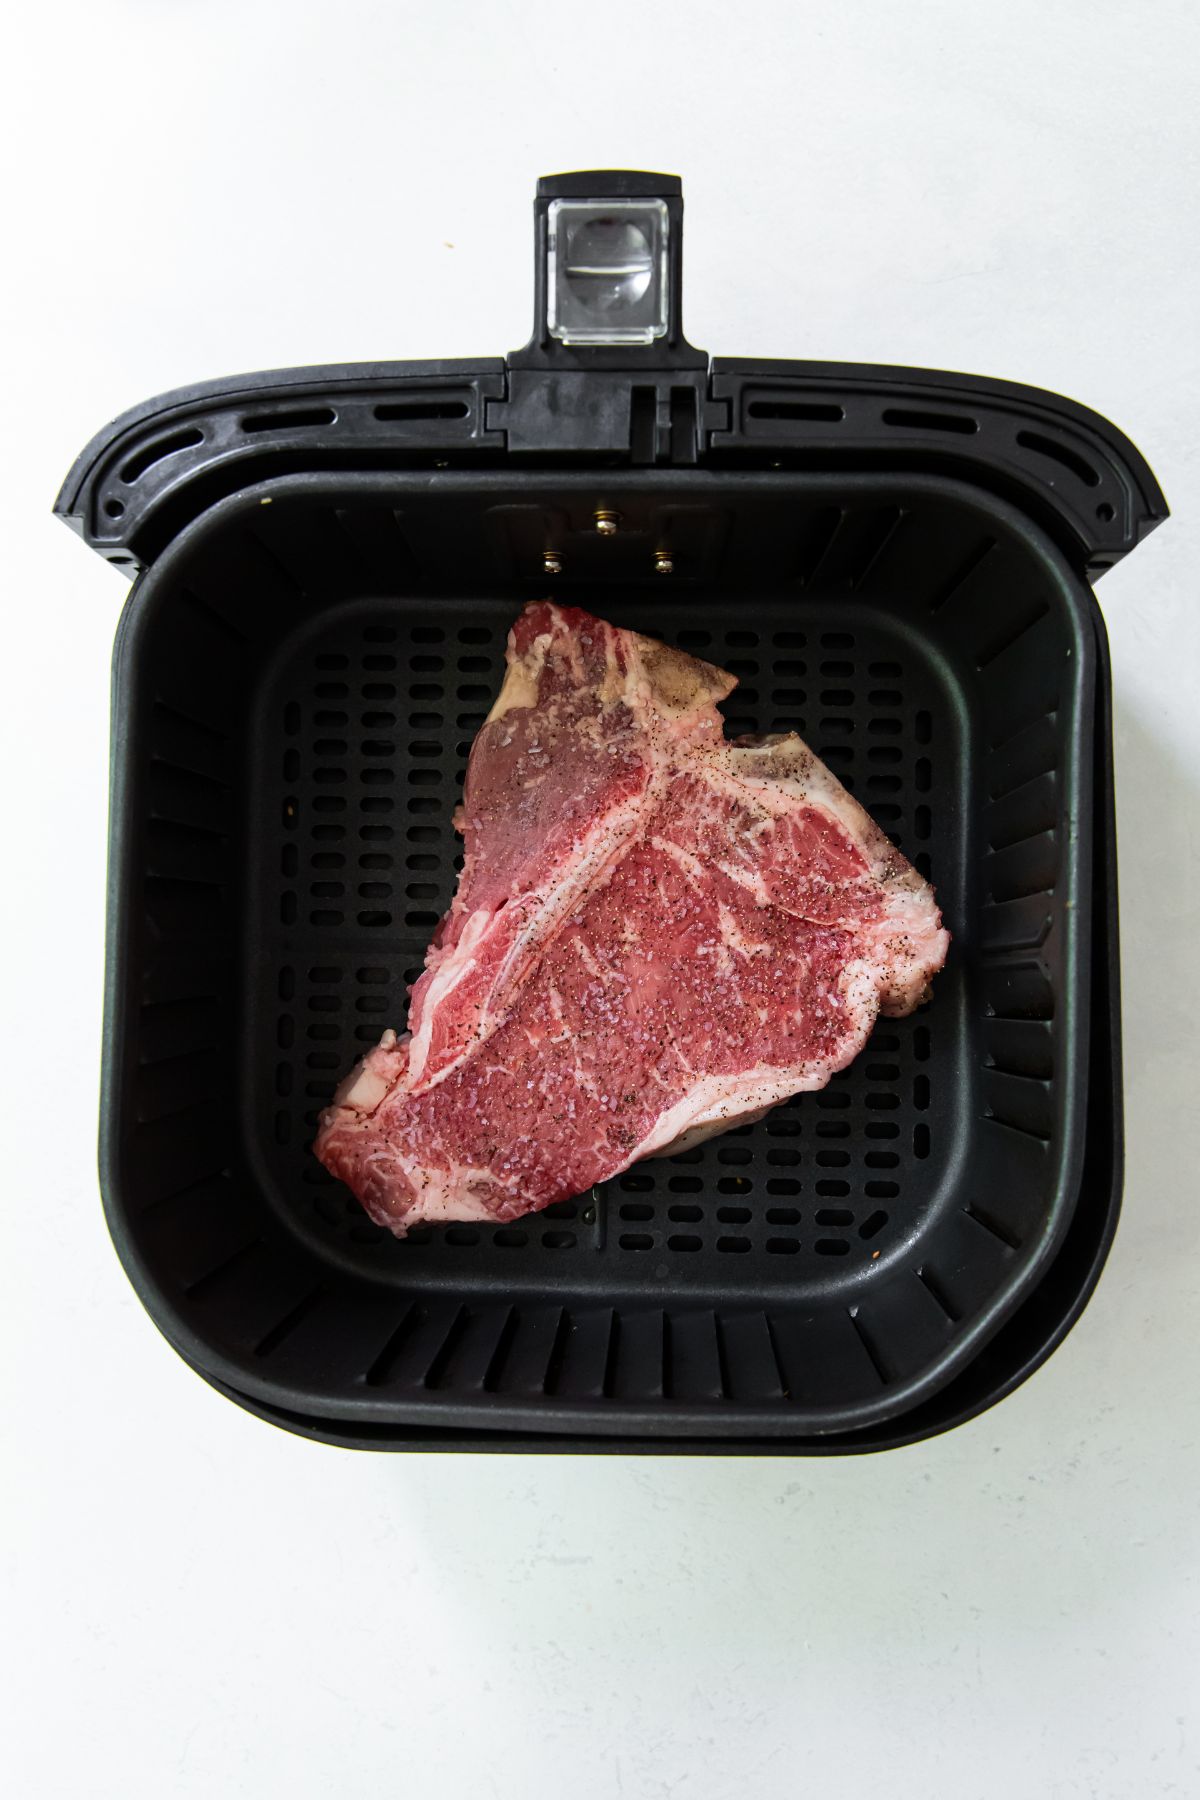 Black air fryer with raw steak inside